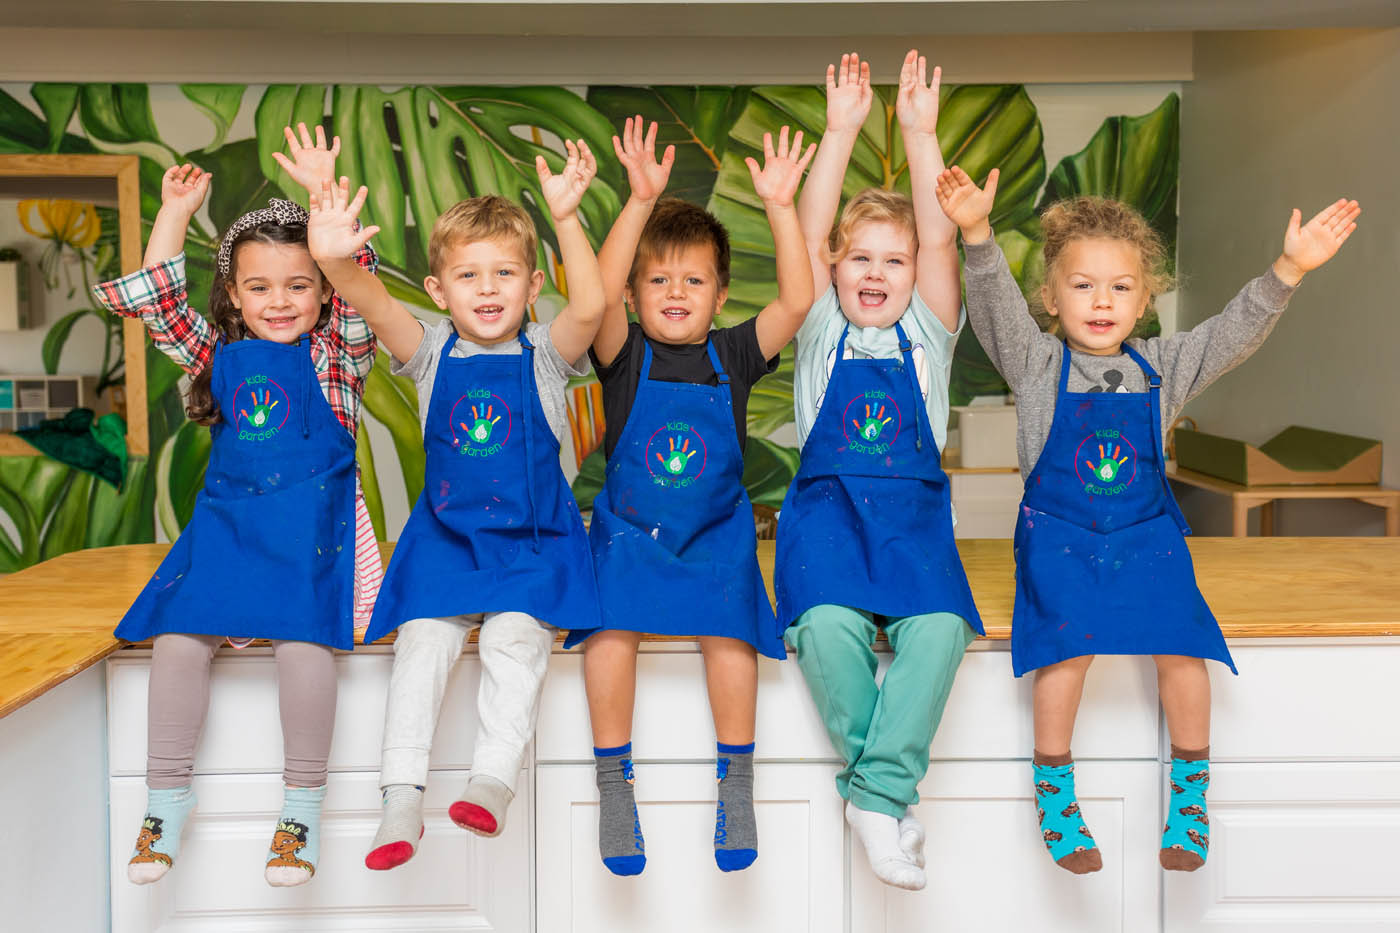 Kids in blue aprons at Kids Garden Asheville learning center.